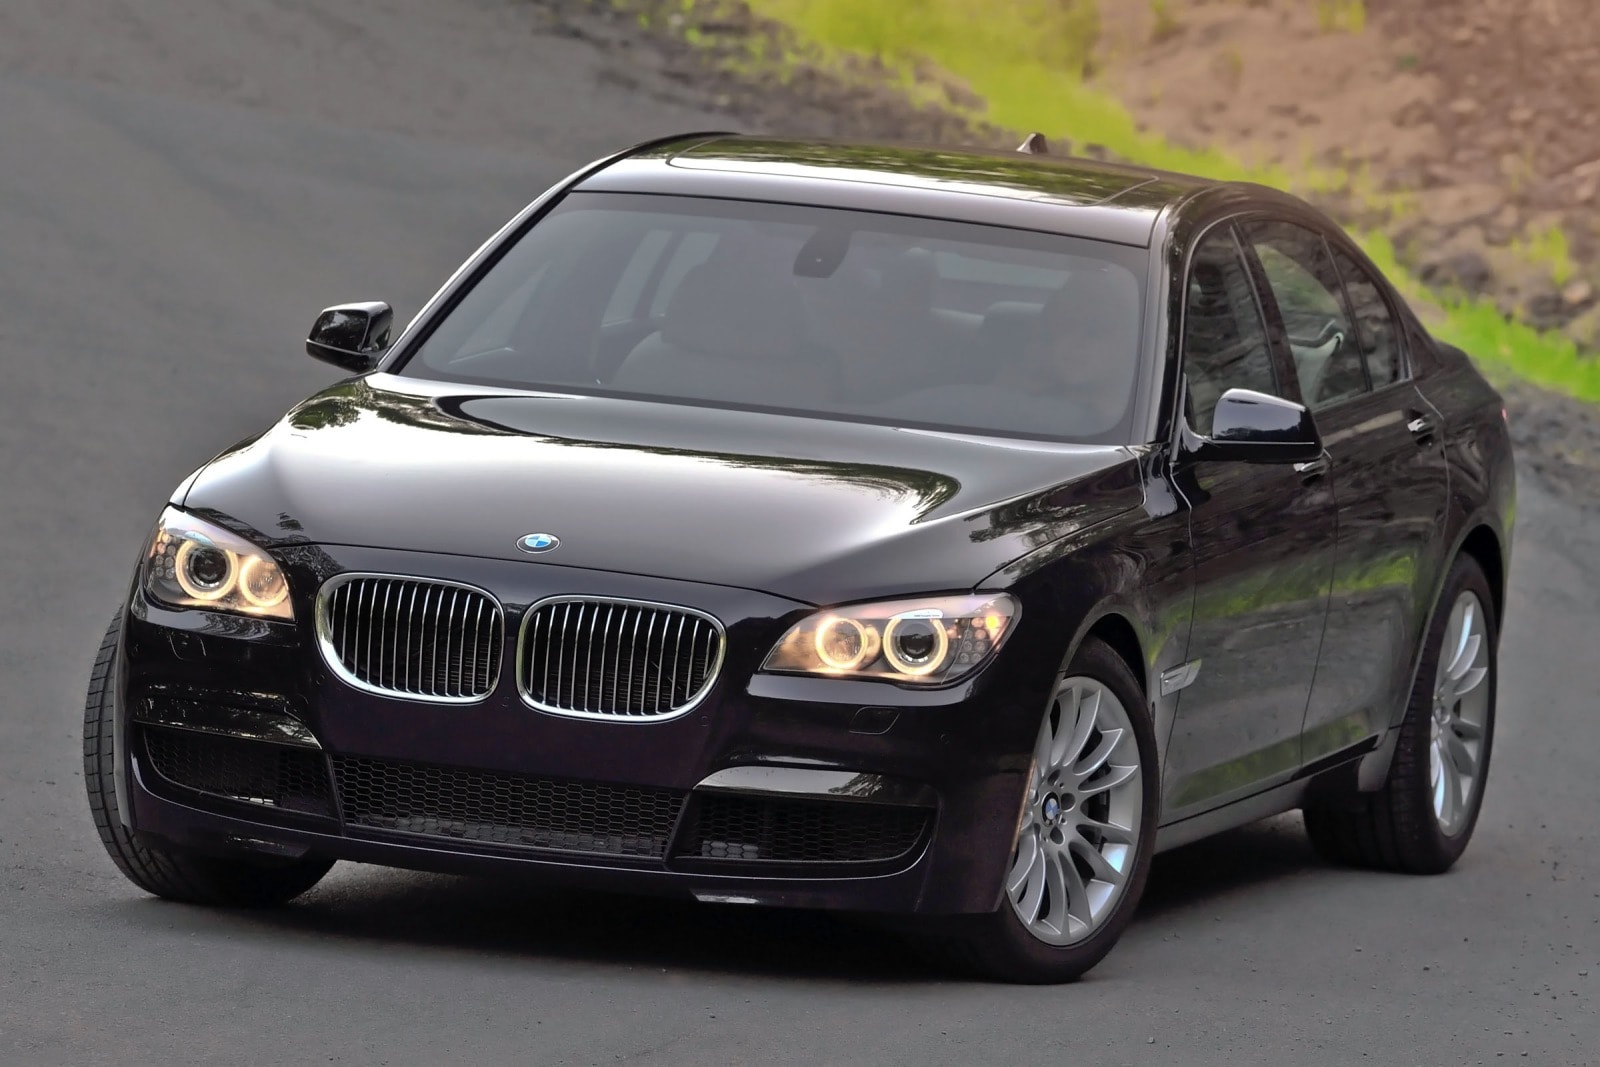 2012 BMW 7 Series Review & Ratings | Edmunds